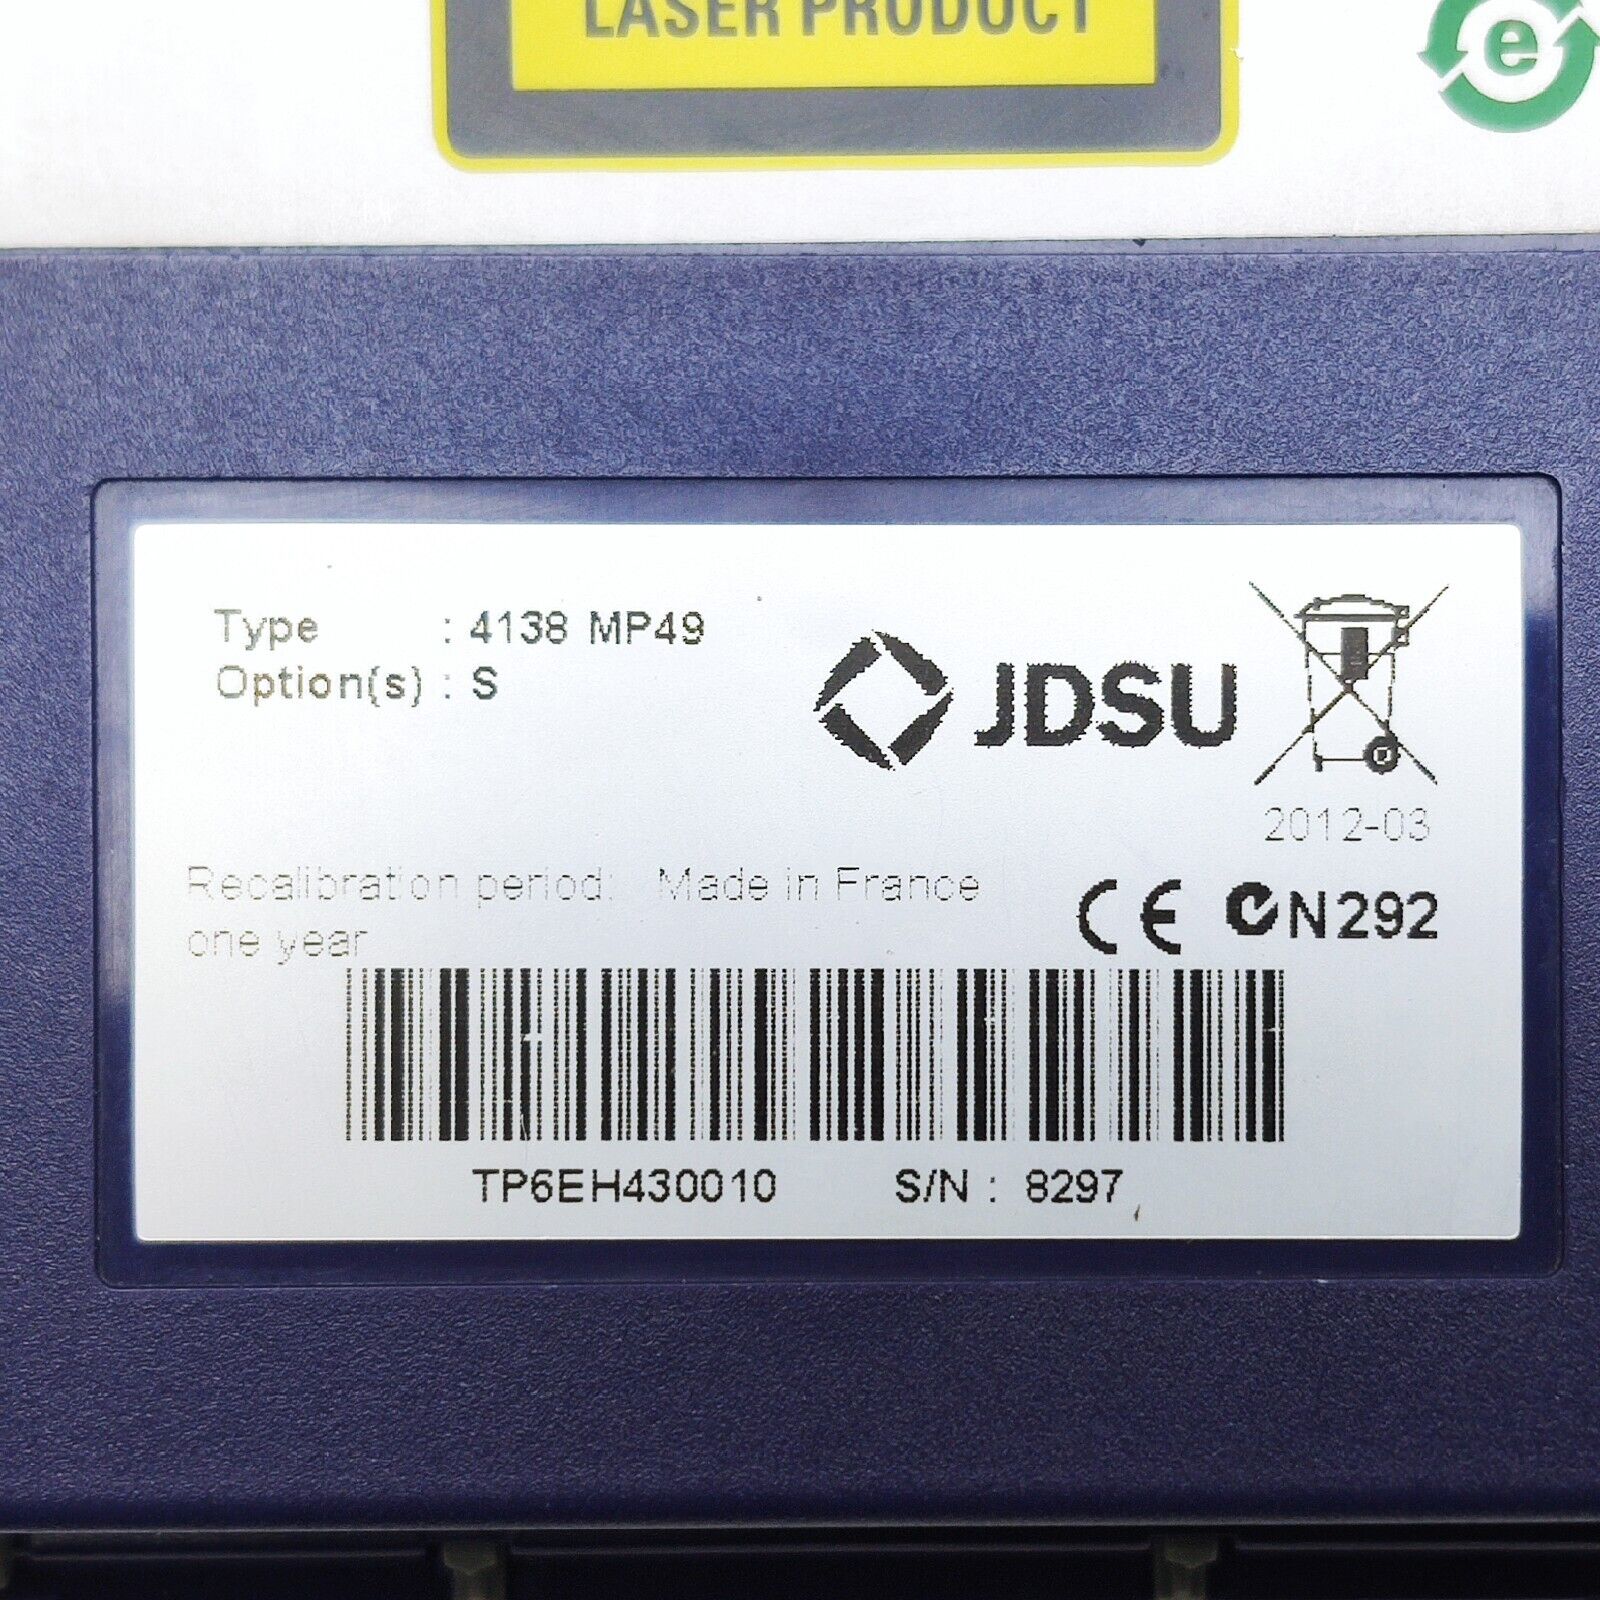 Viavi JDSU MTS 2000 w 4138 MP49 1310/1490/1550 nm OTDR 43/41/41 dB Metro PON